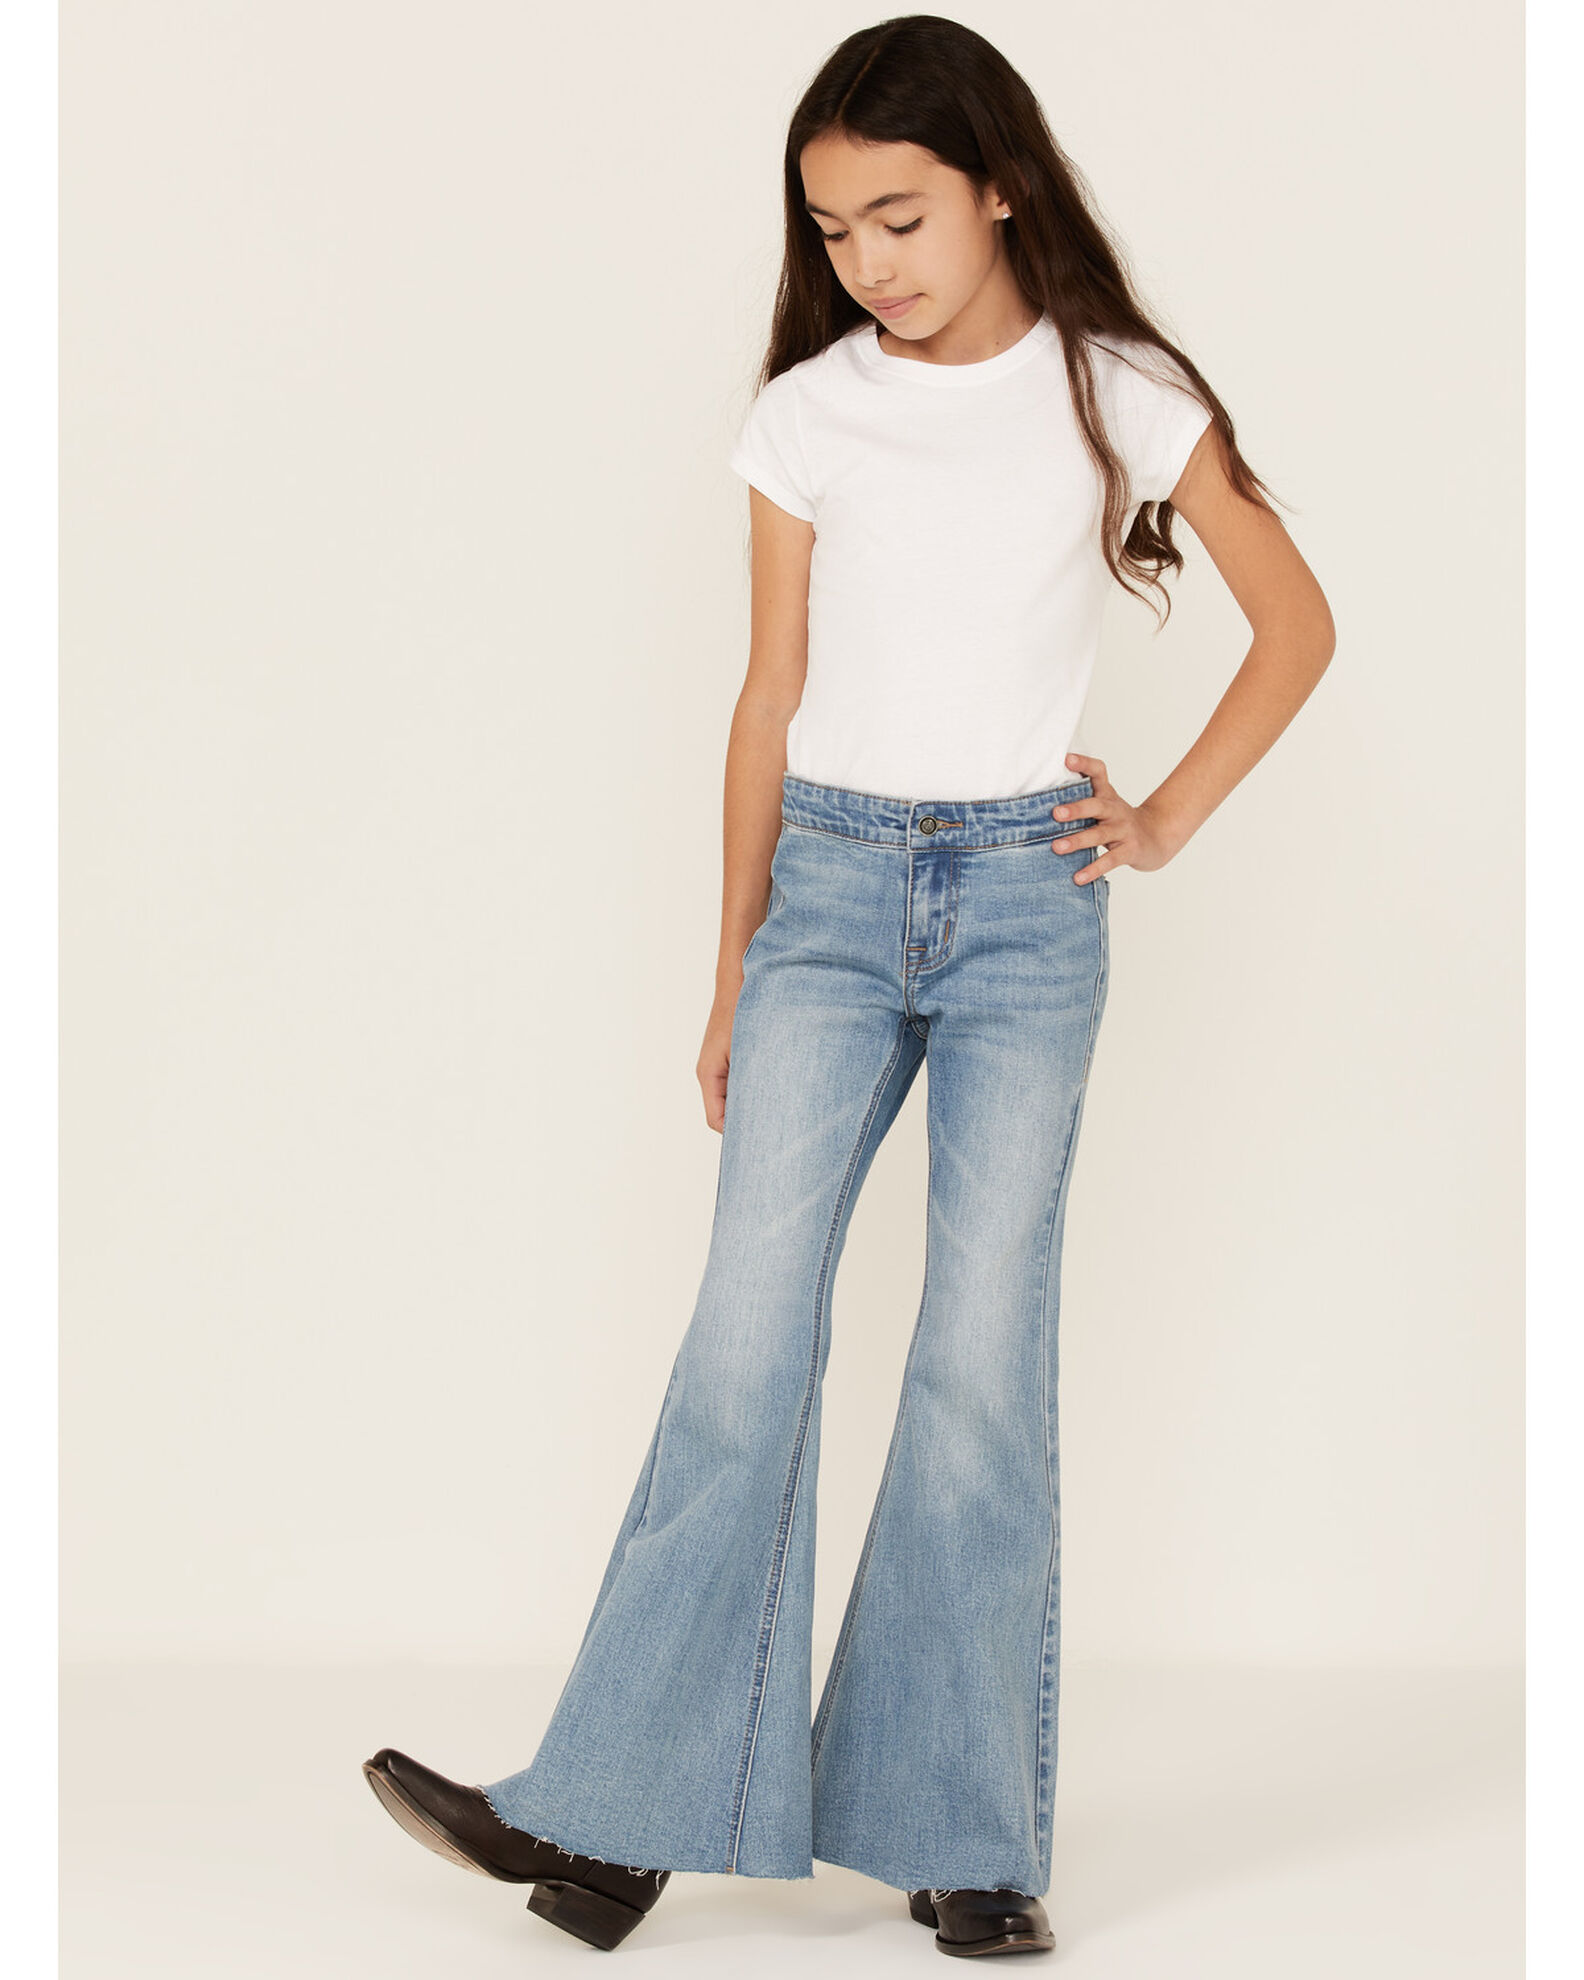 Product Name: Rock & Roll Denim Girls' Light Wash Flare Jeans